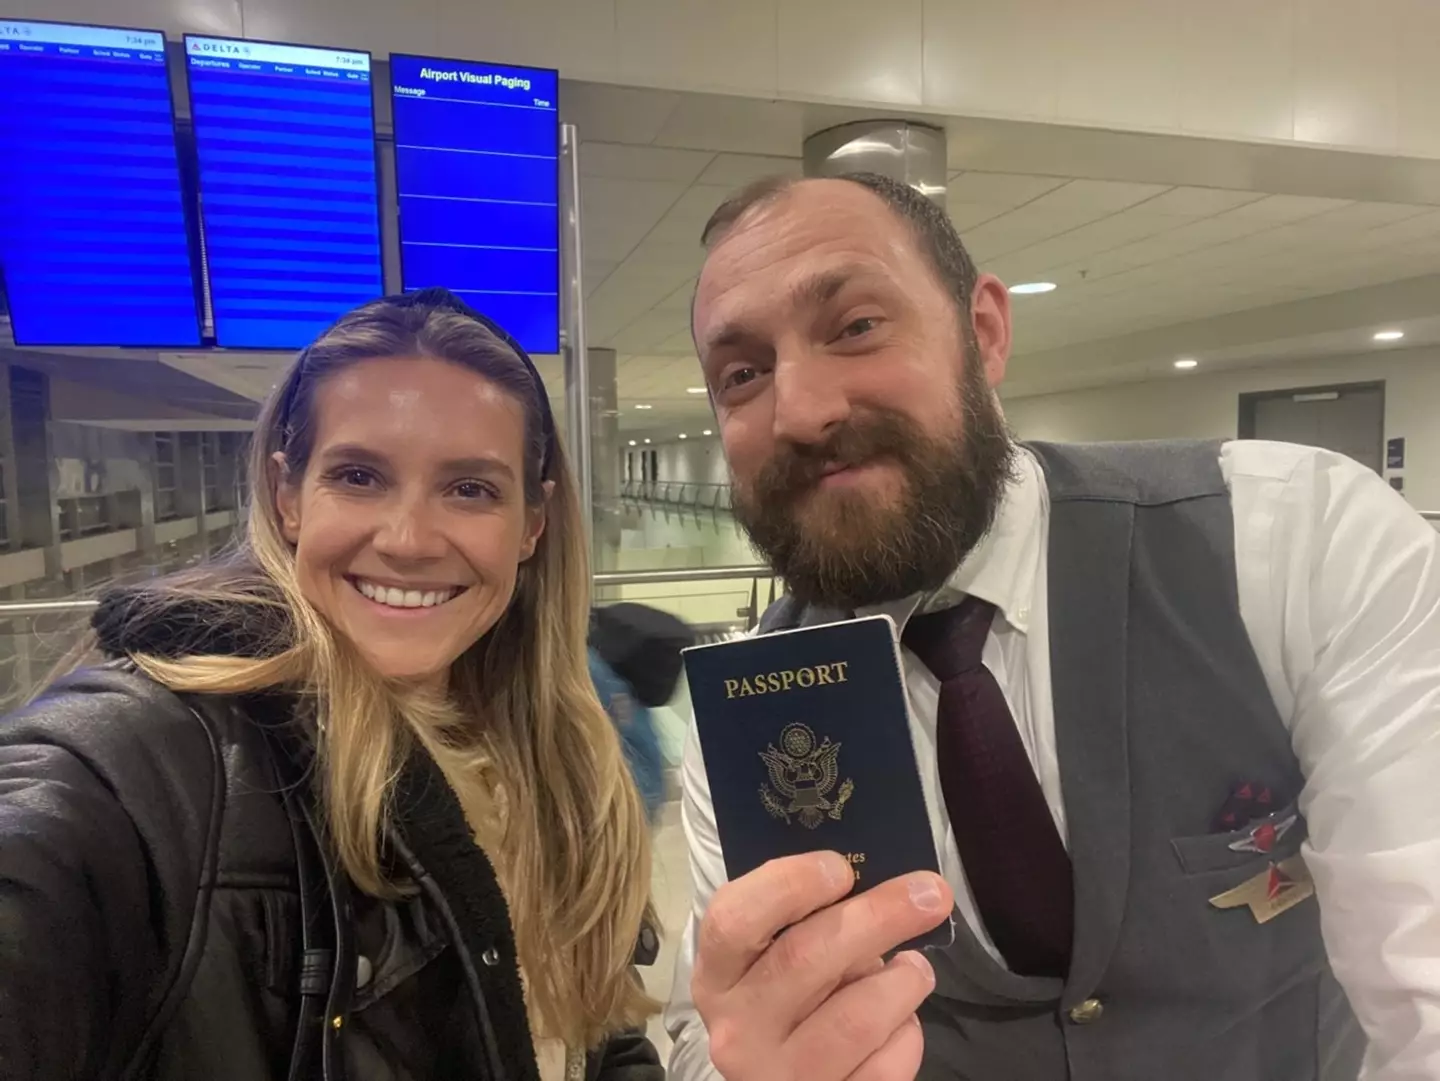 The Delta employee saved the couple's honeymoon.